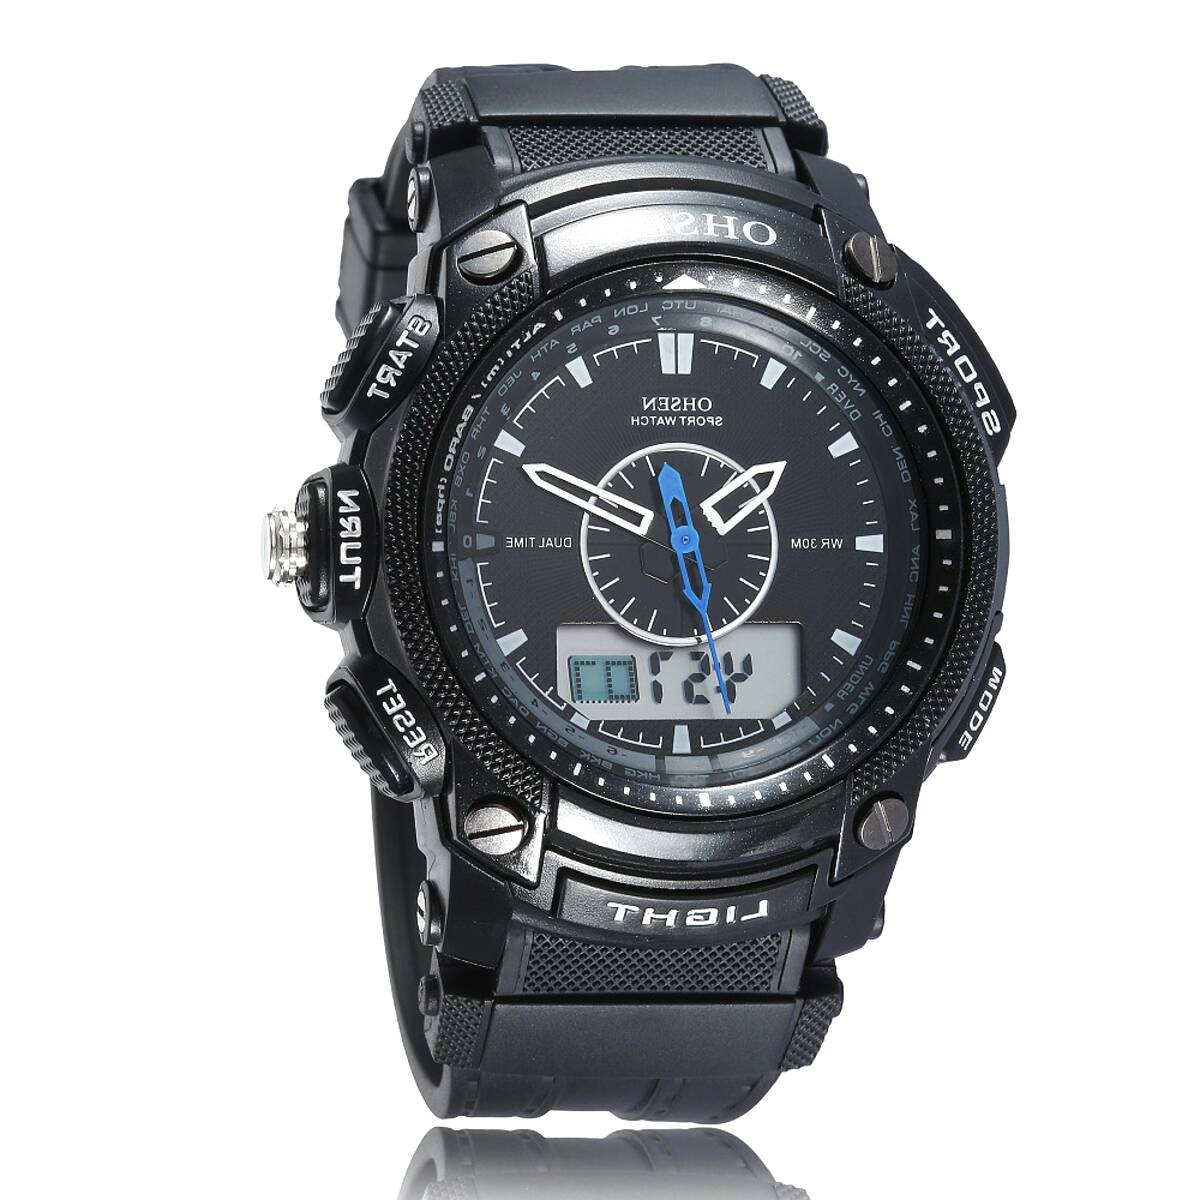 Ohsen Sport Watch for sale in UK | 23 used Ohsen Sport Watchs